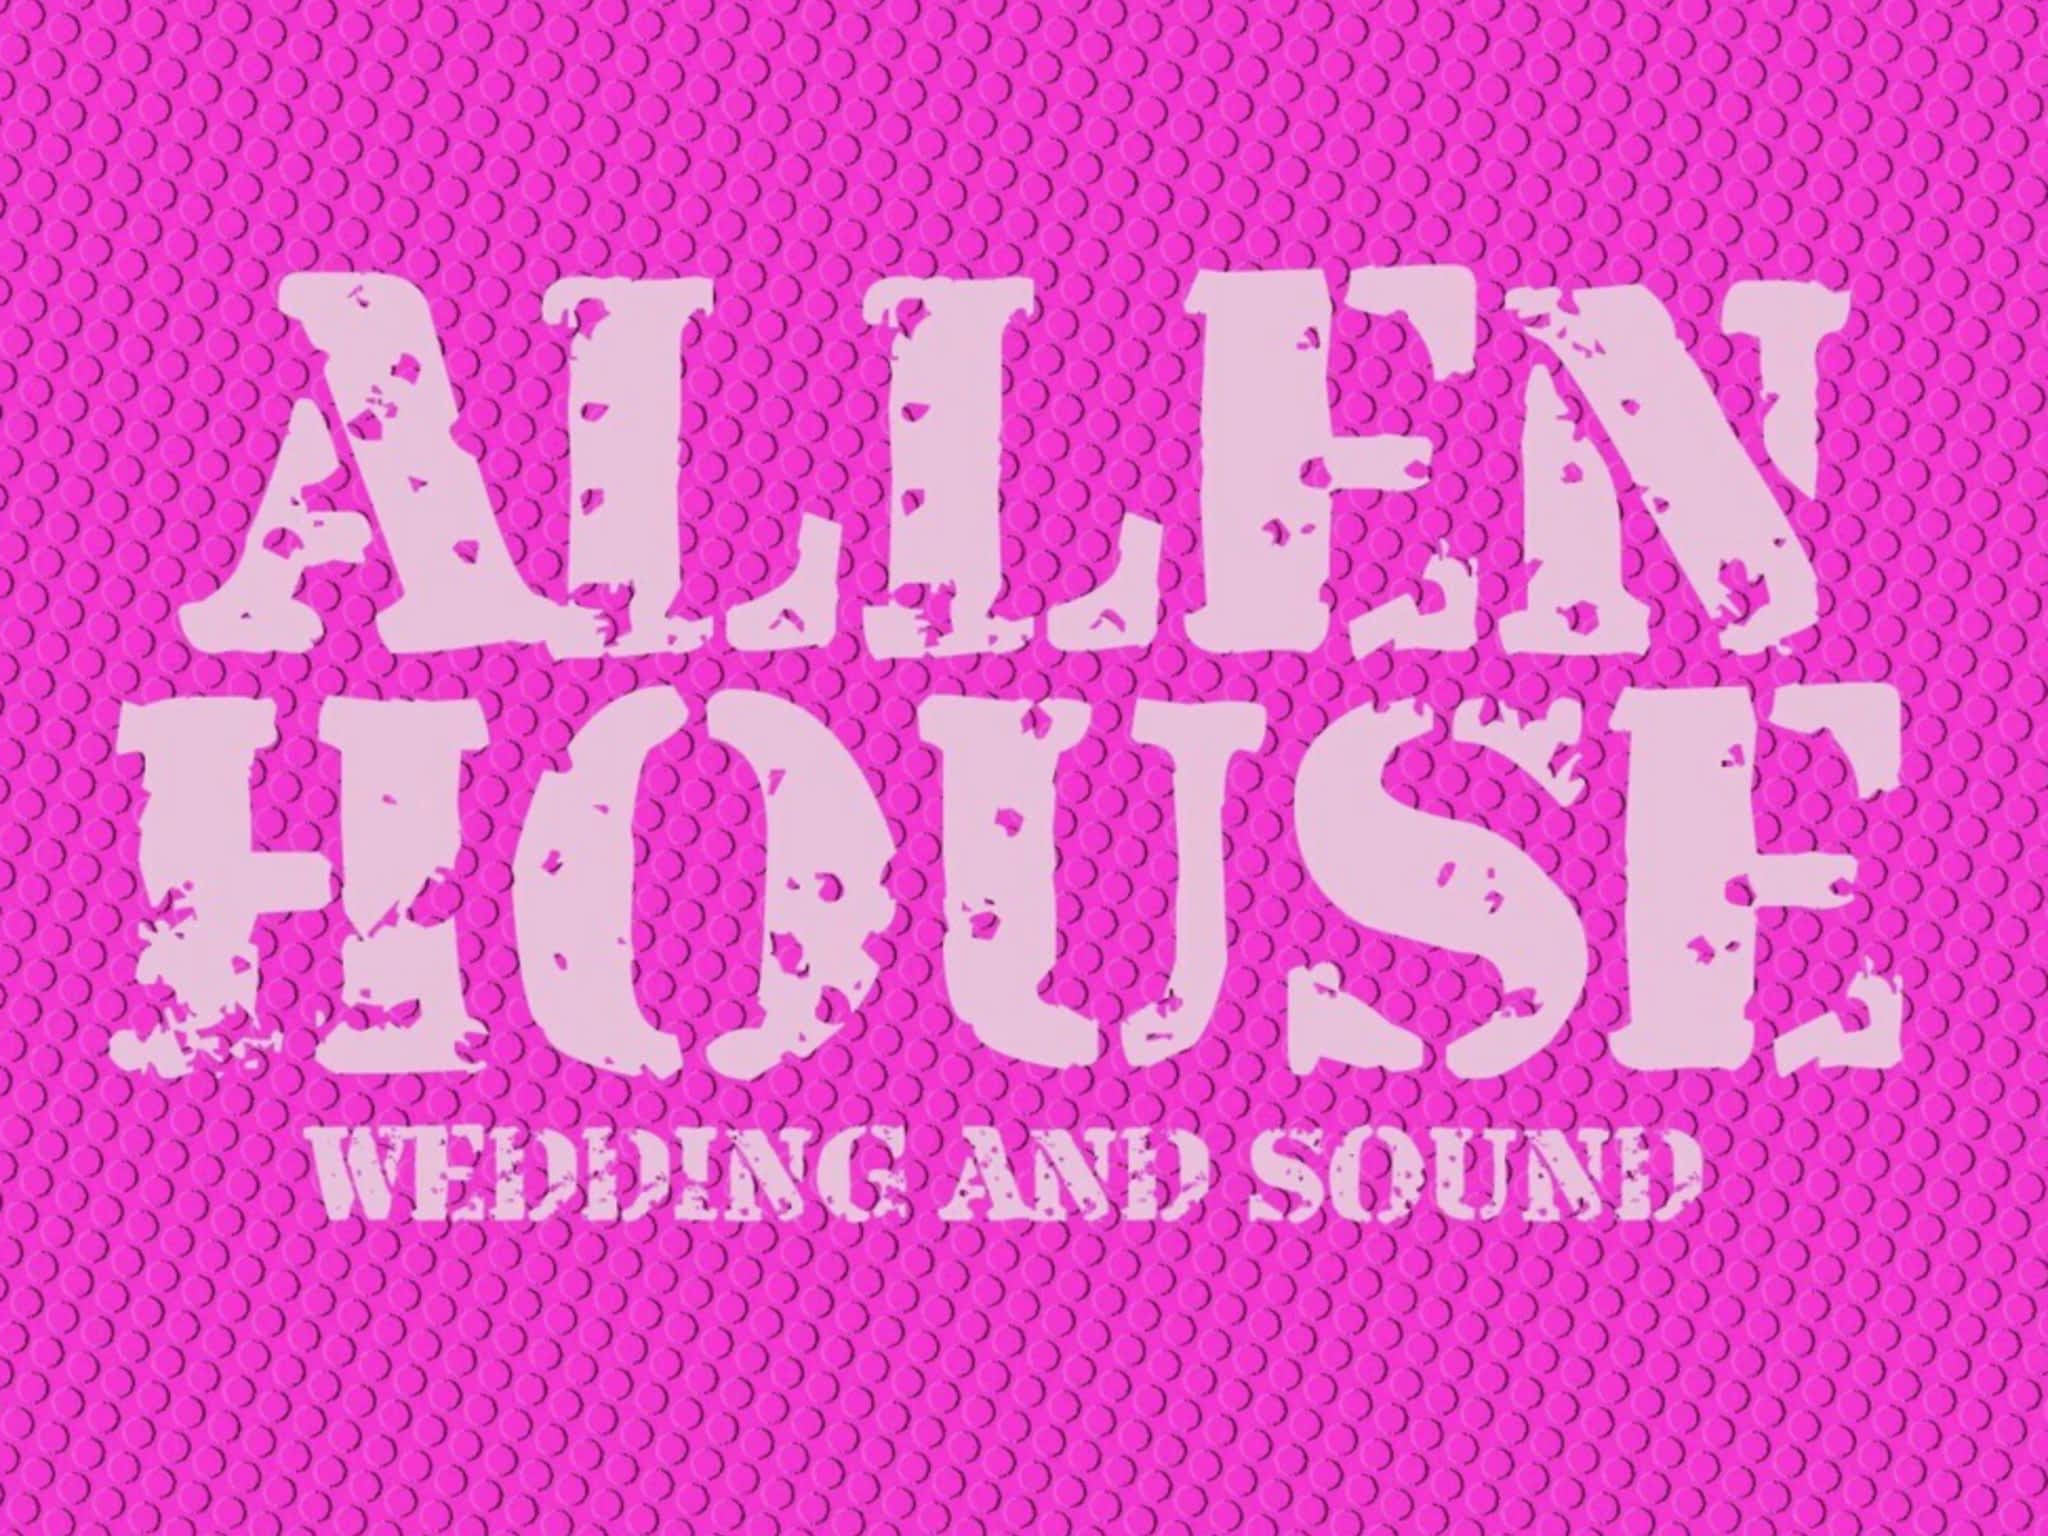 photo Allenhouse Wedding & Sound